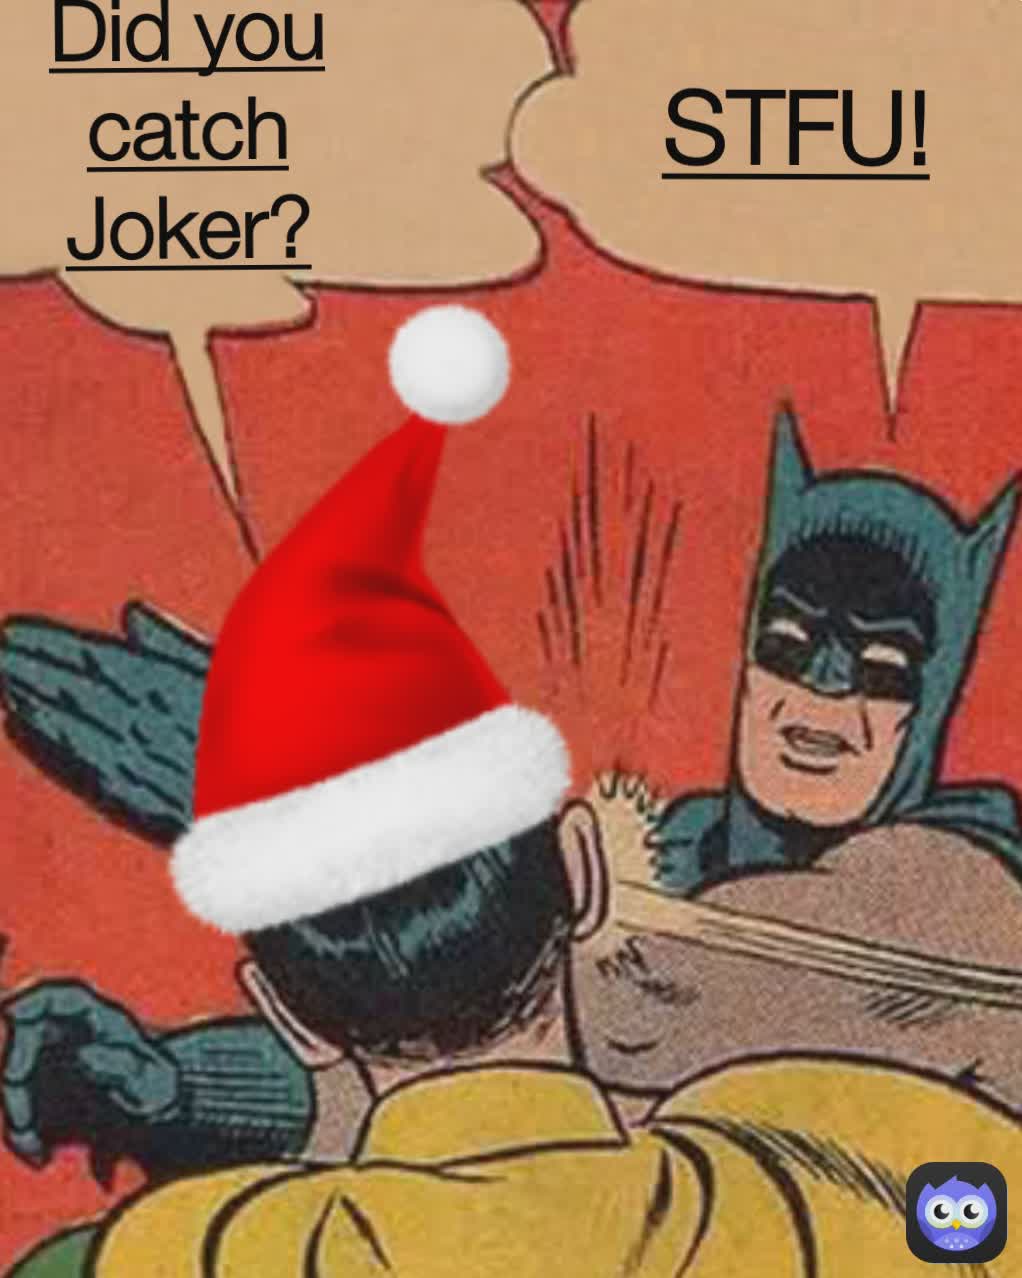 Did you catch Joker? STFU! Did you catch Joker?